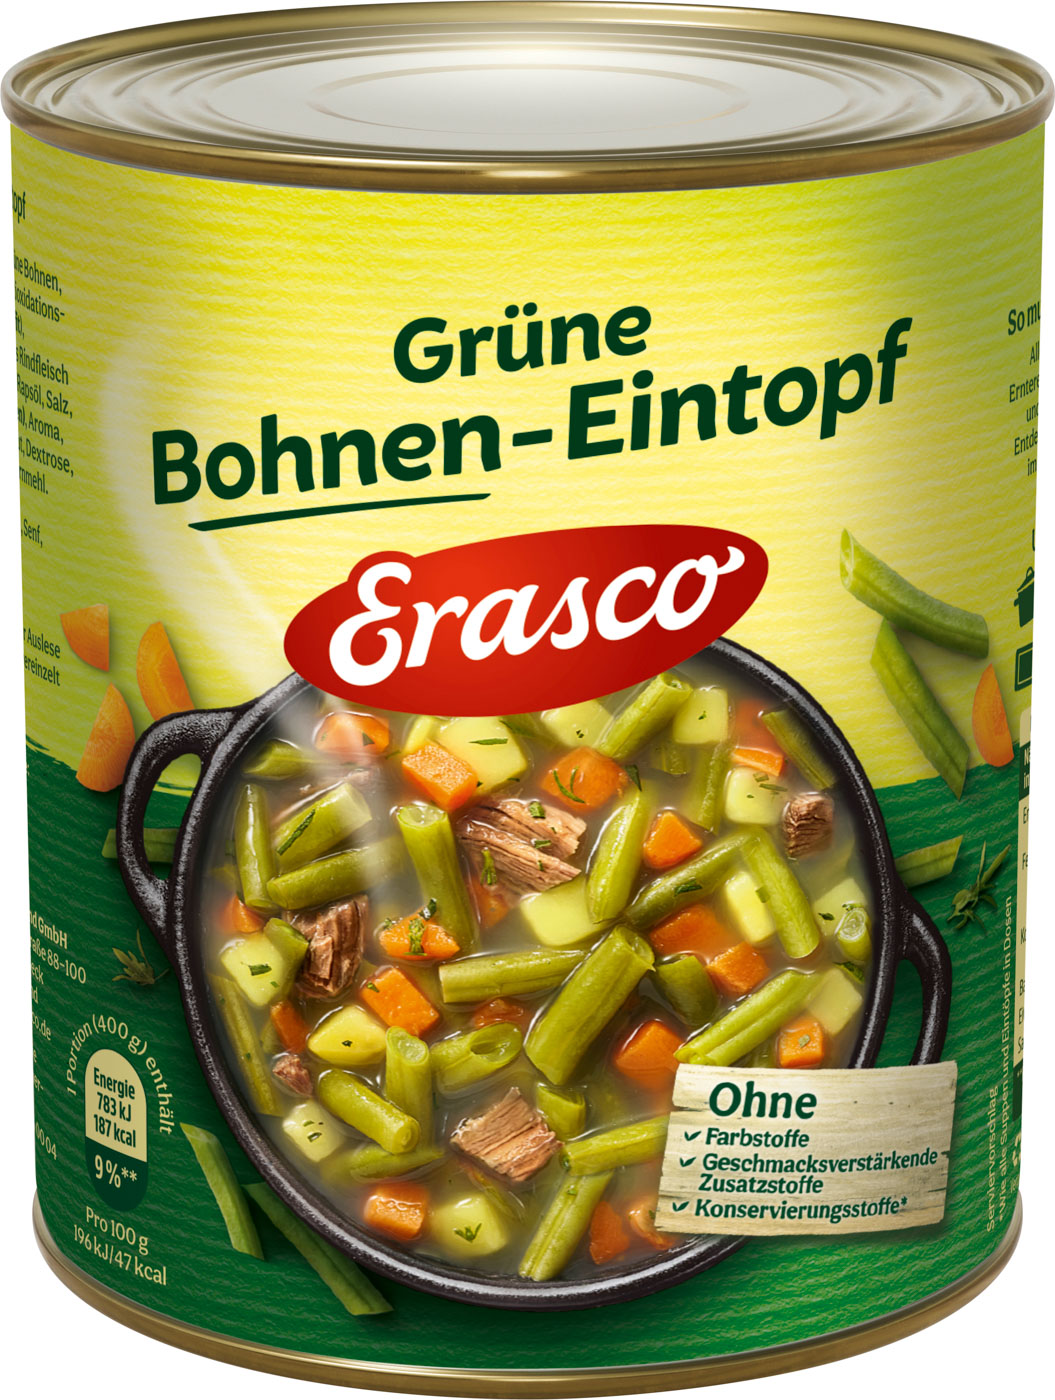 Erasco Grüne Bohnentopf 800G